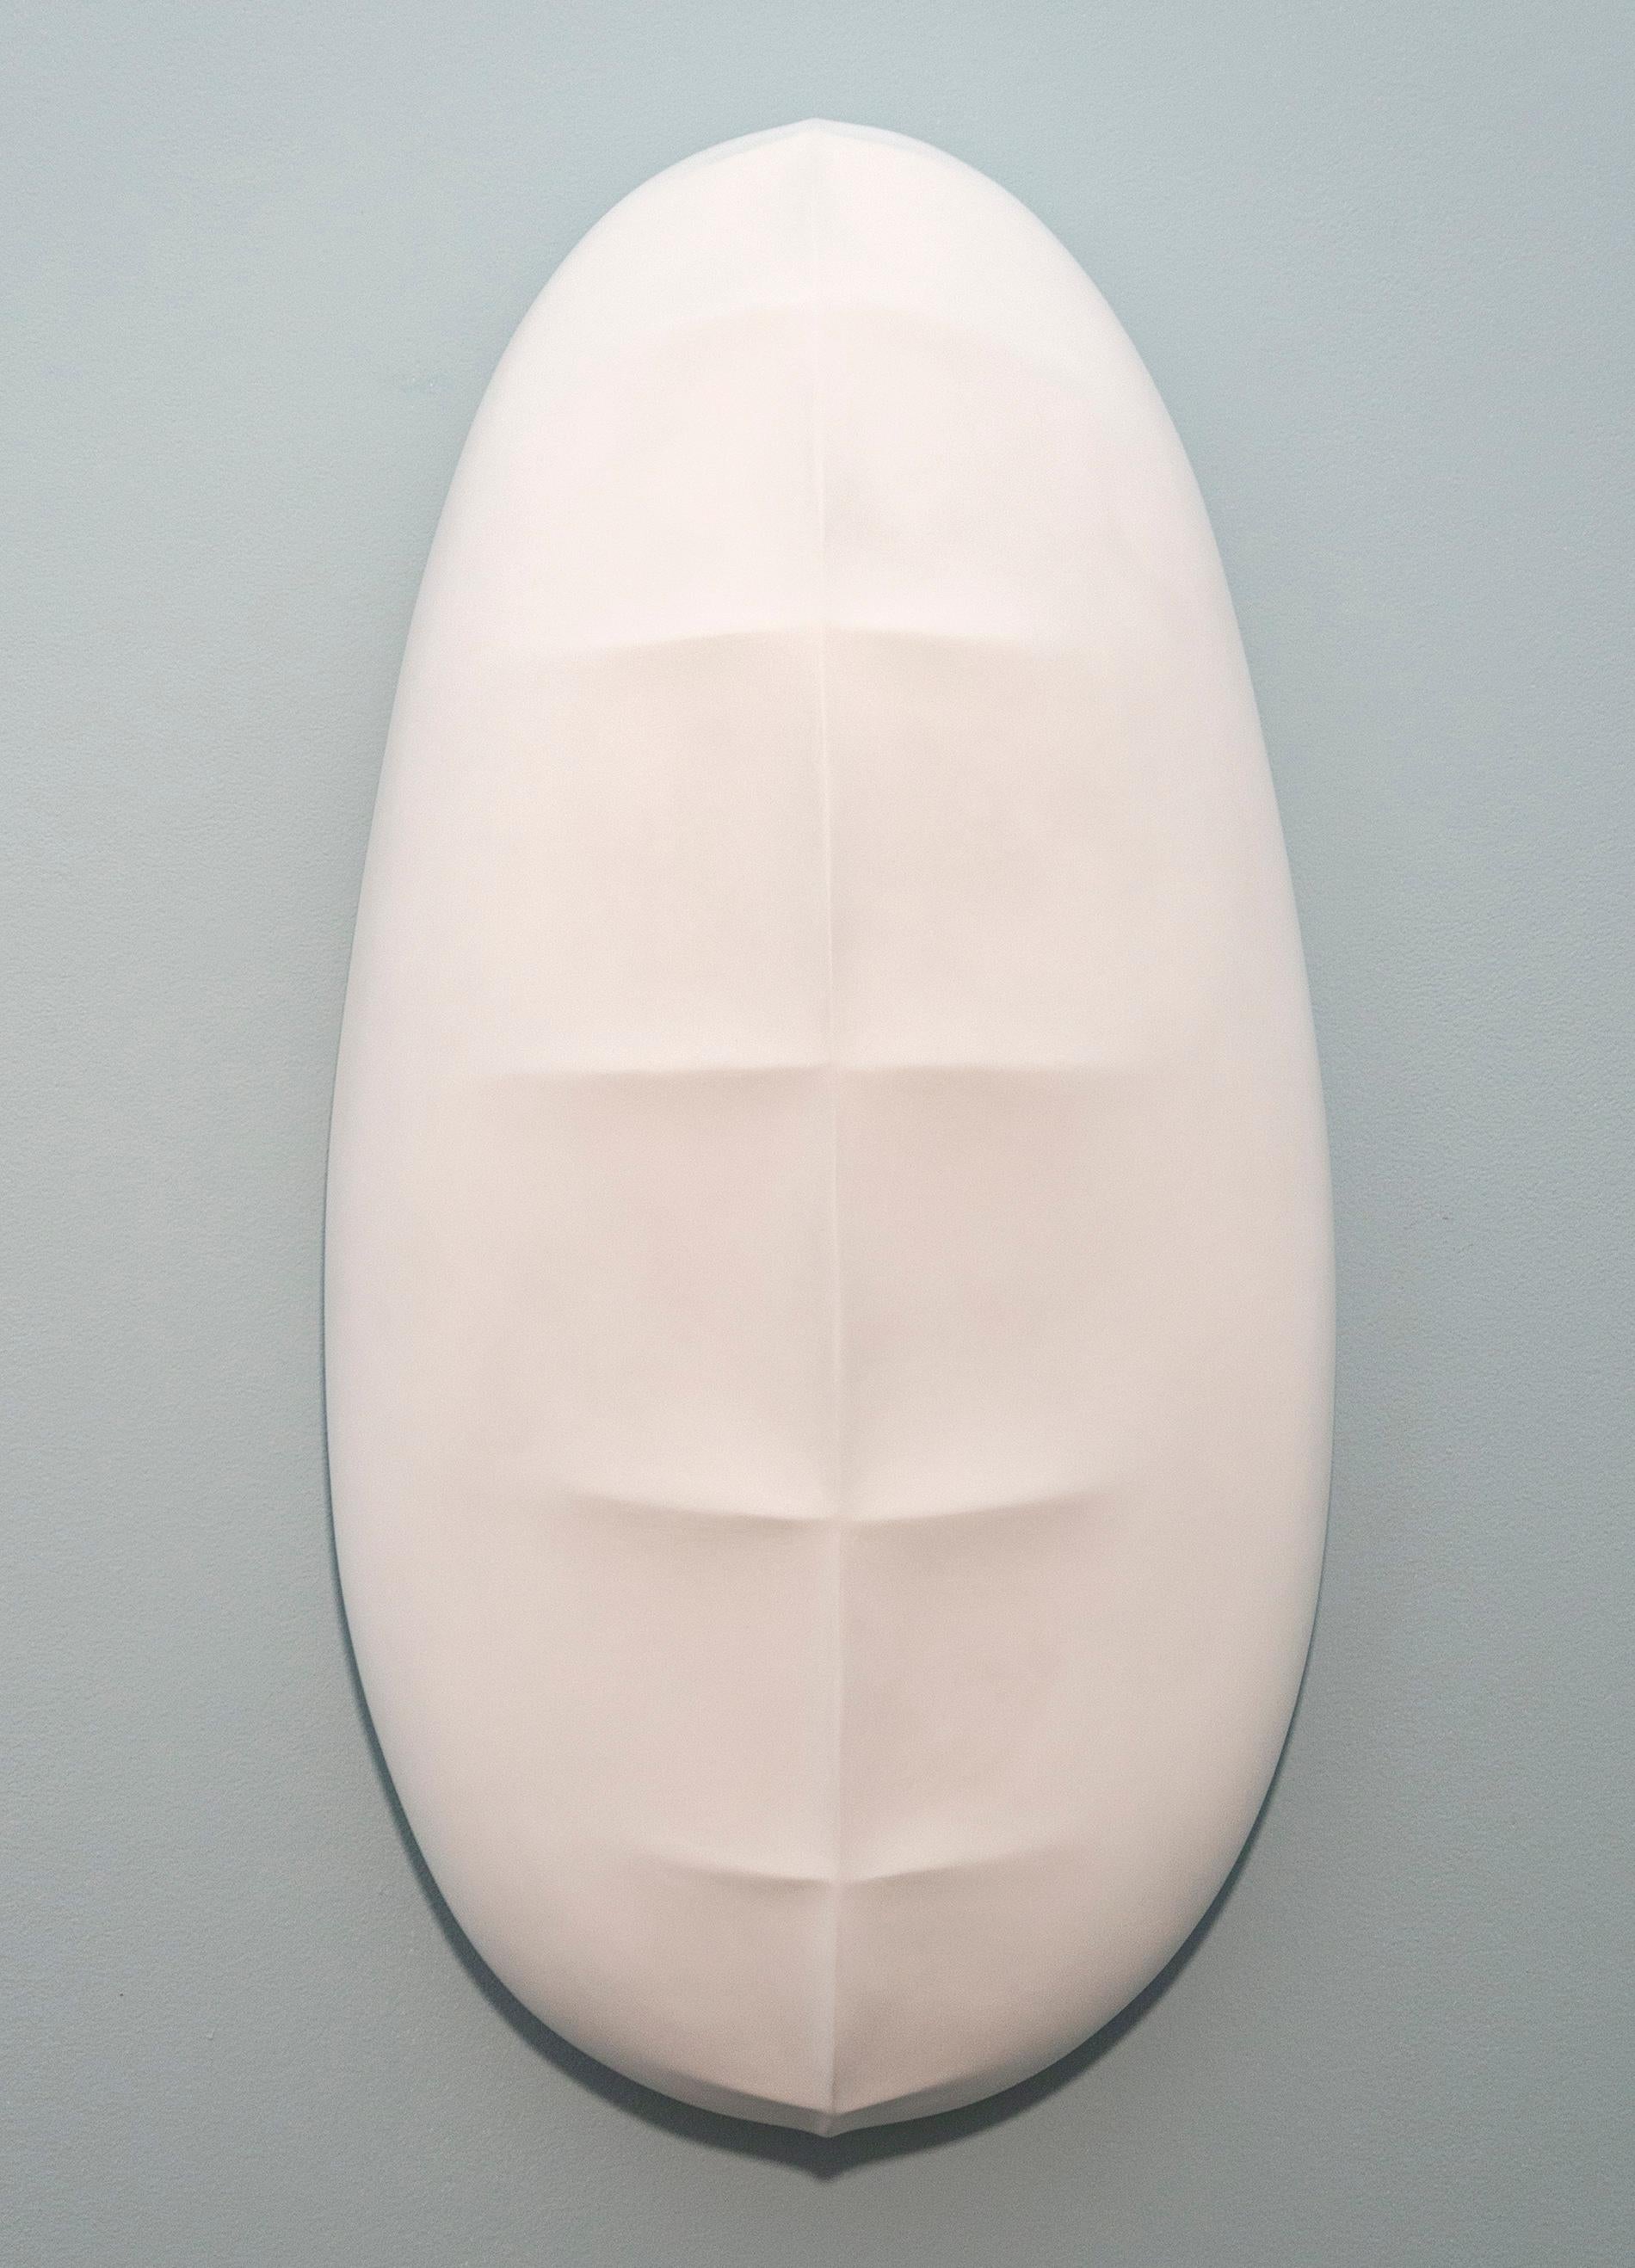 Jana Osterman Abstract Sculpture - Biomorphic No 4 - white, minimalist, abstract, Venetian plaster wall sculpture